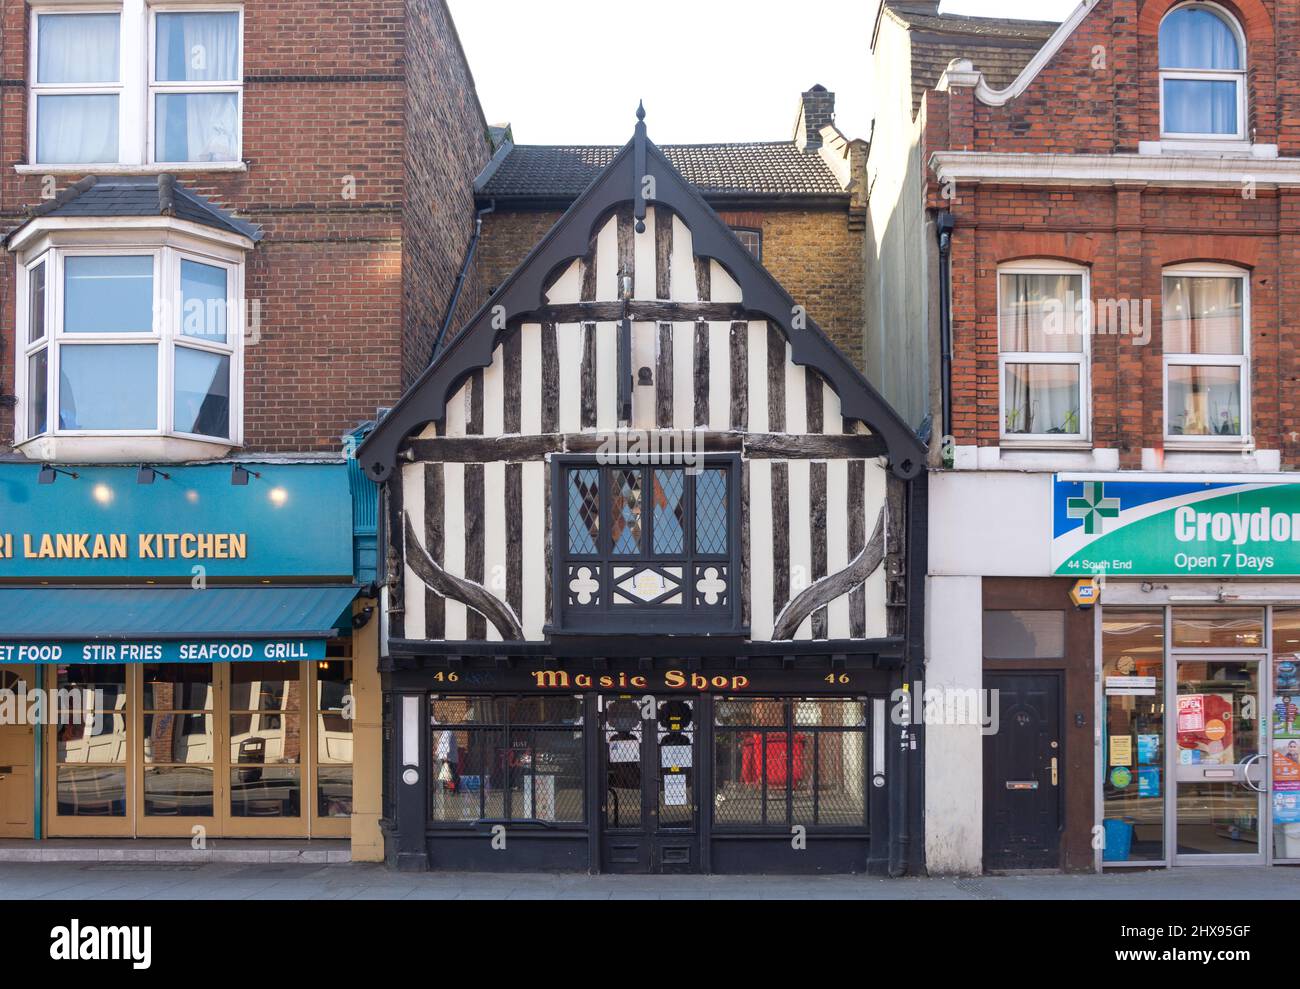 17th century 46 South End building (music shop), South End, South Croydon, London Borough of Croydon, Greater London, England, United Kingdom Stock Photo